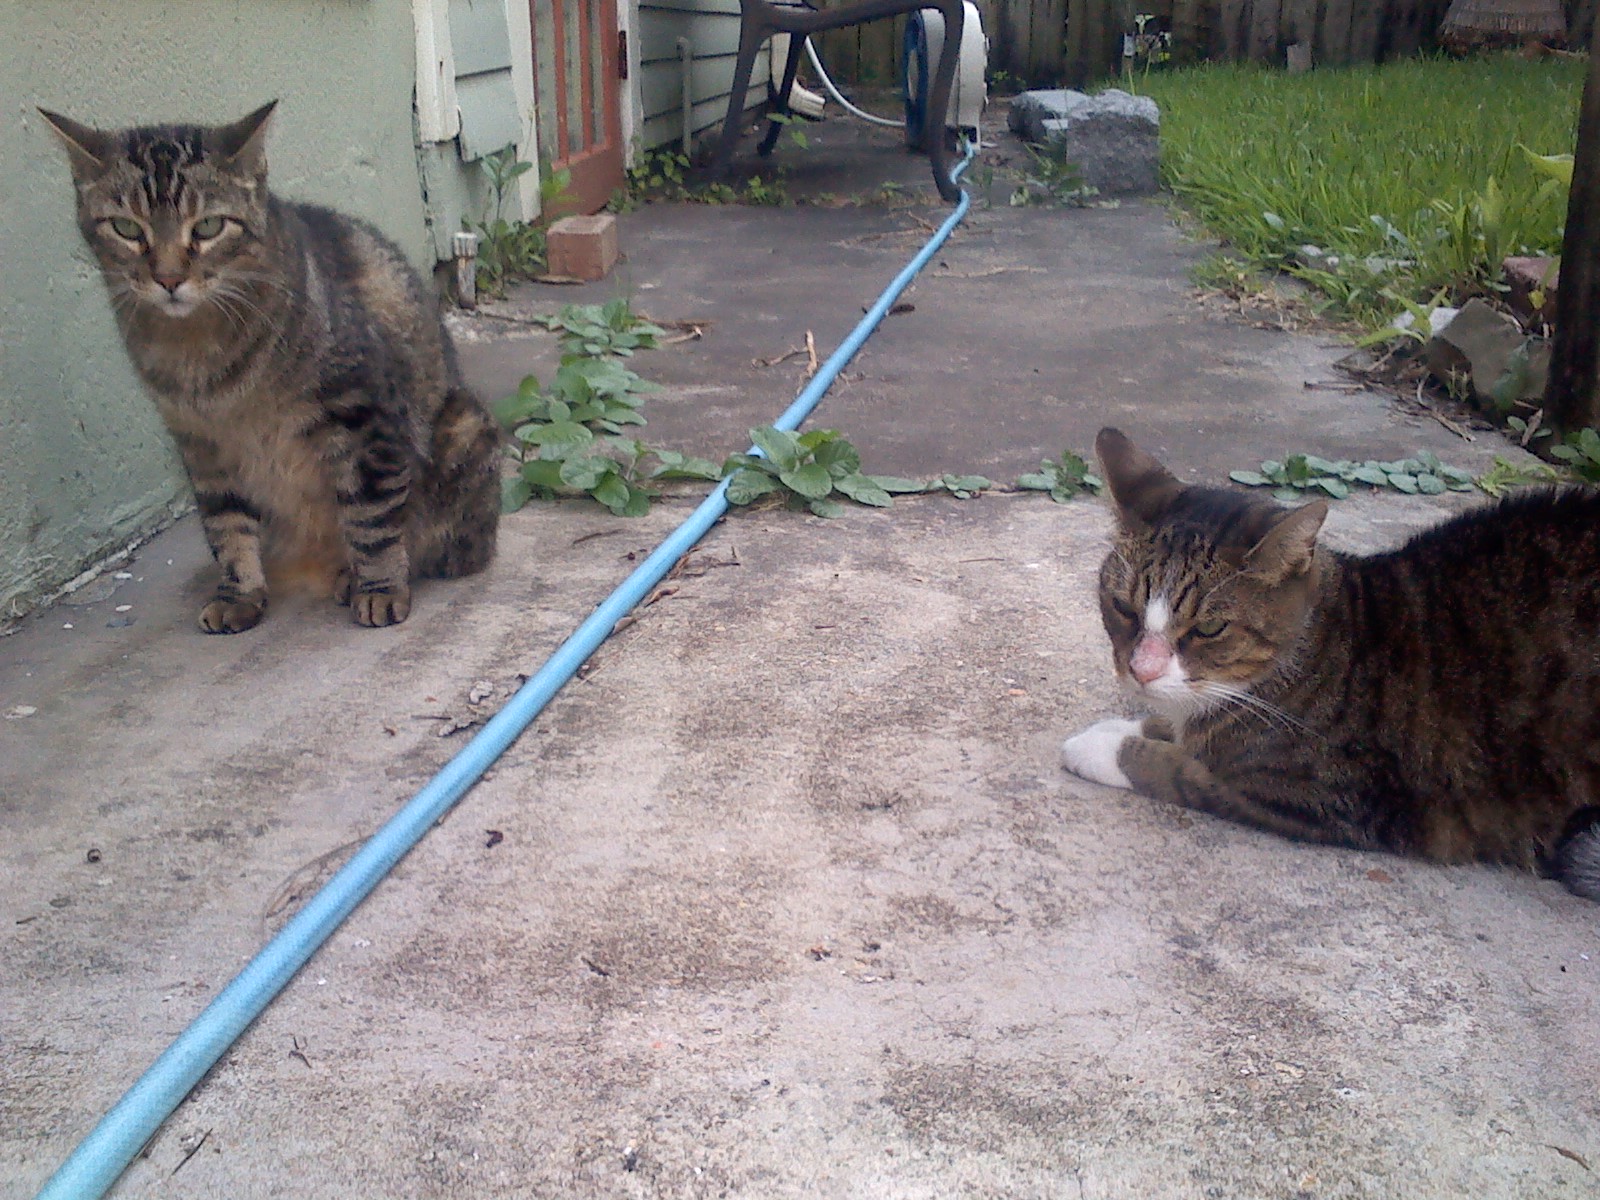 Sally made friends with a three-legged cat neighbor.